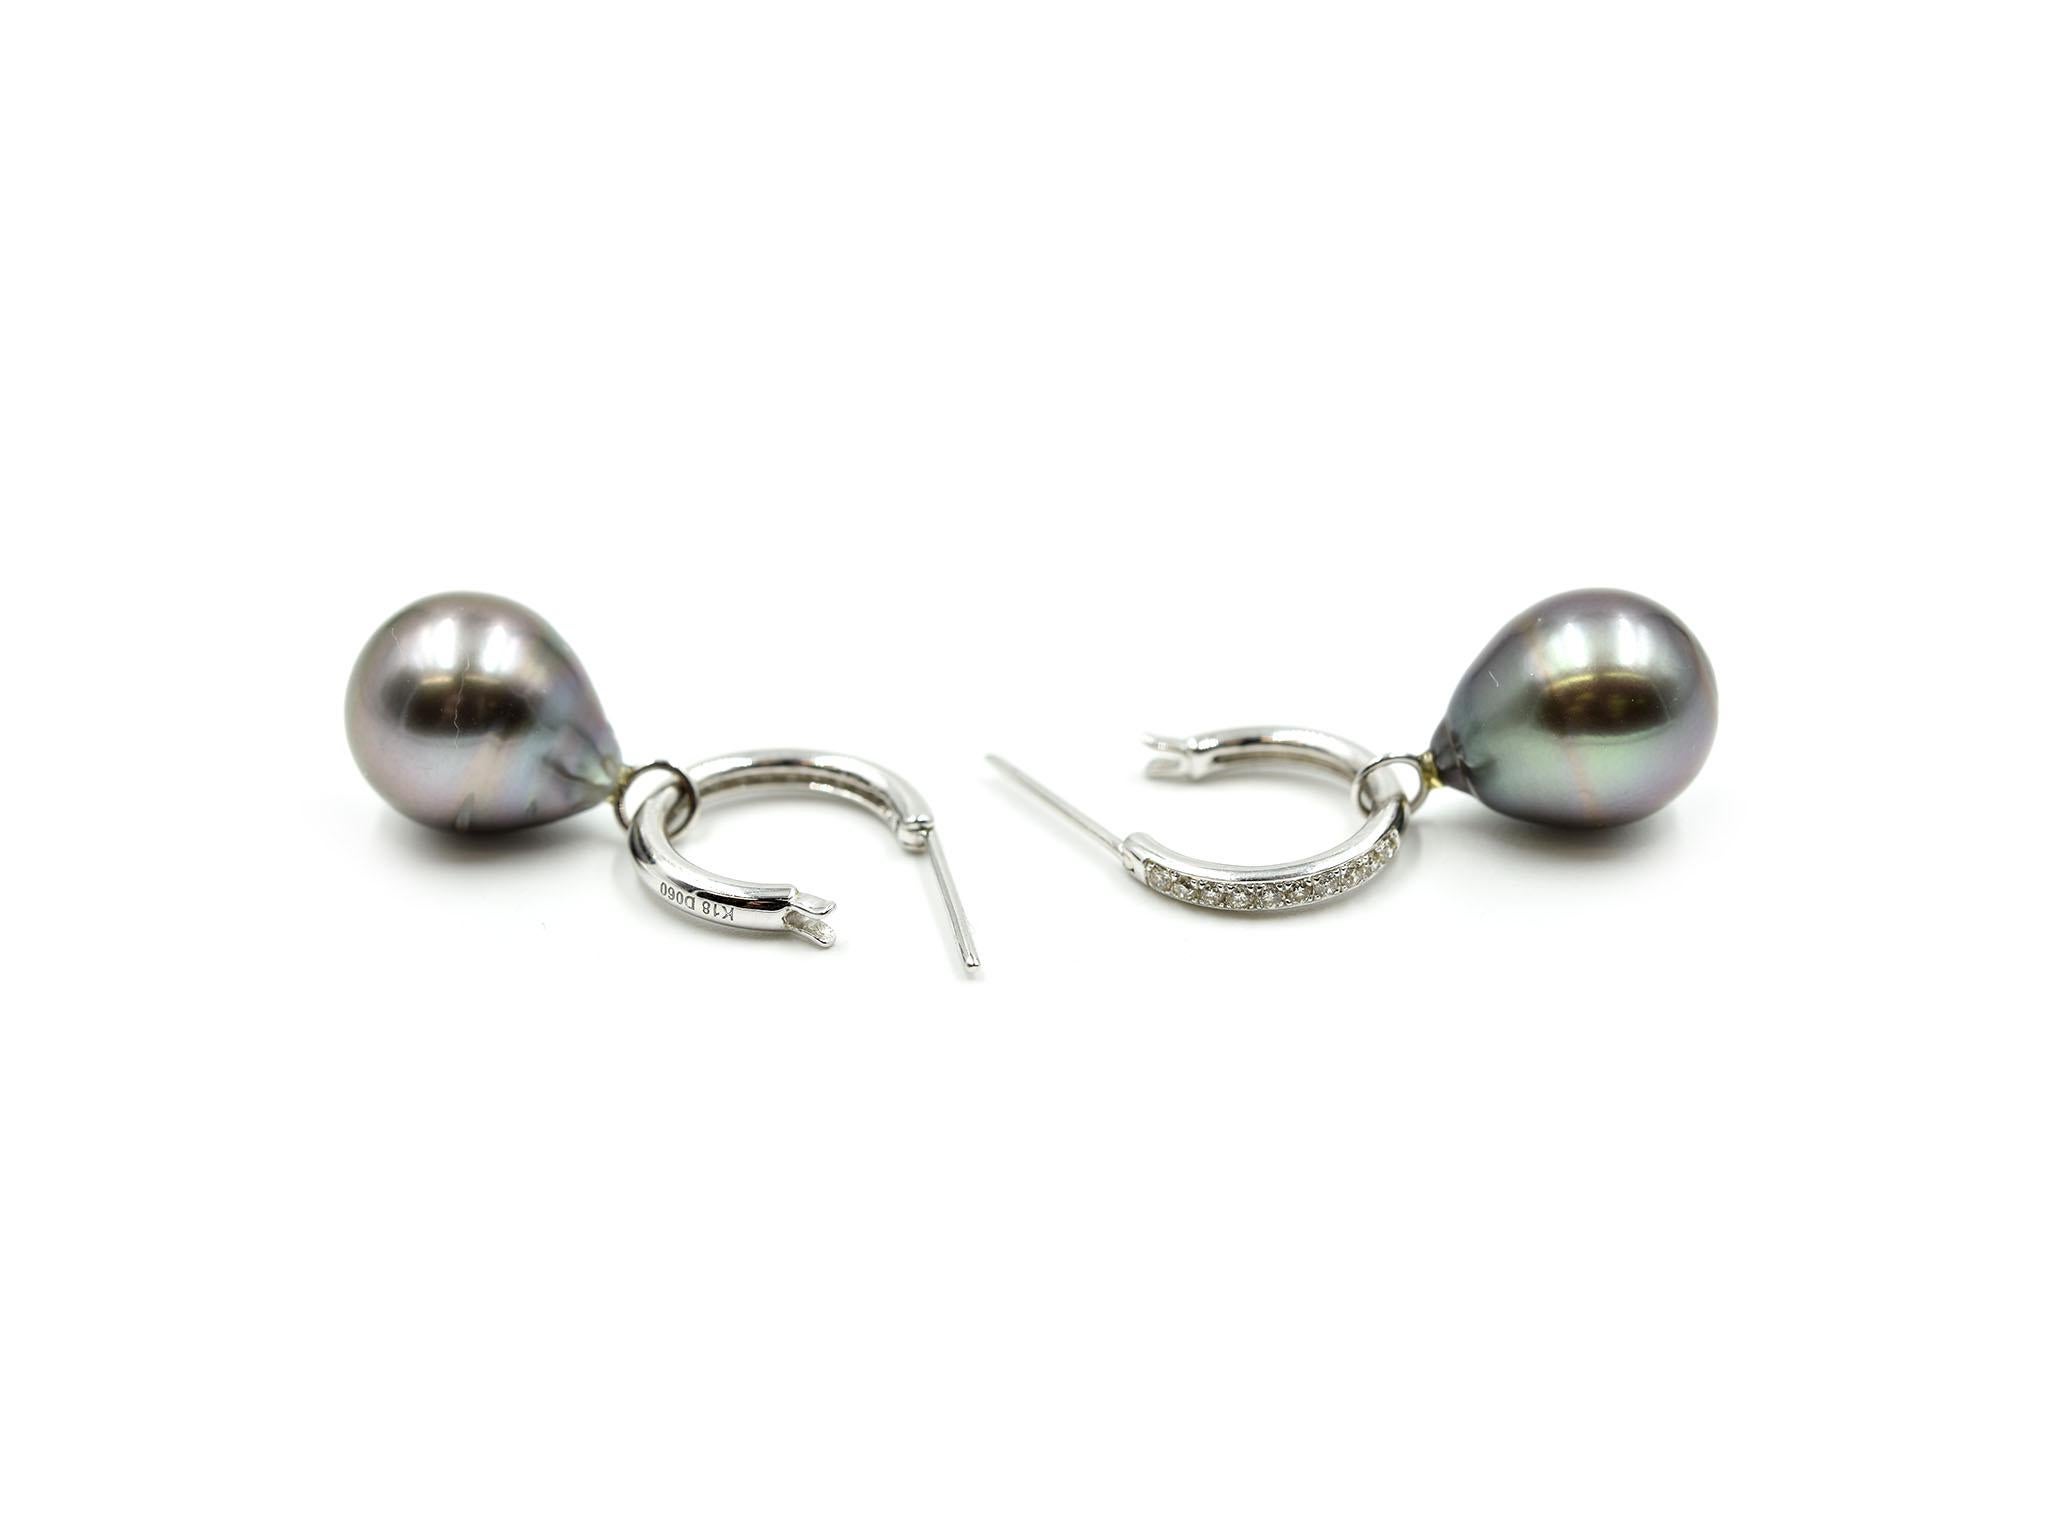 Designer: custom design
Material: 14k white gold
Pearls: two baroque shaped 12.30mm Tahitian pearls
Fastenings: snap closures
Weight: 8.73 grams
